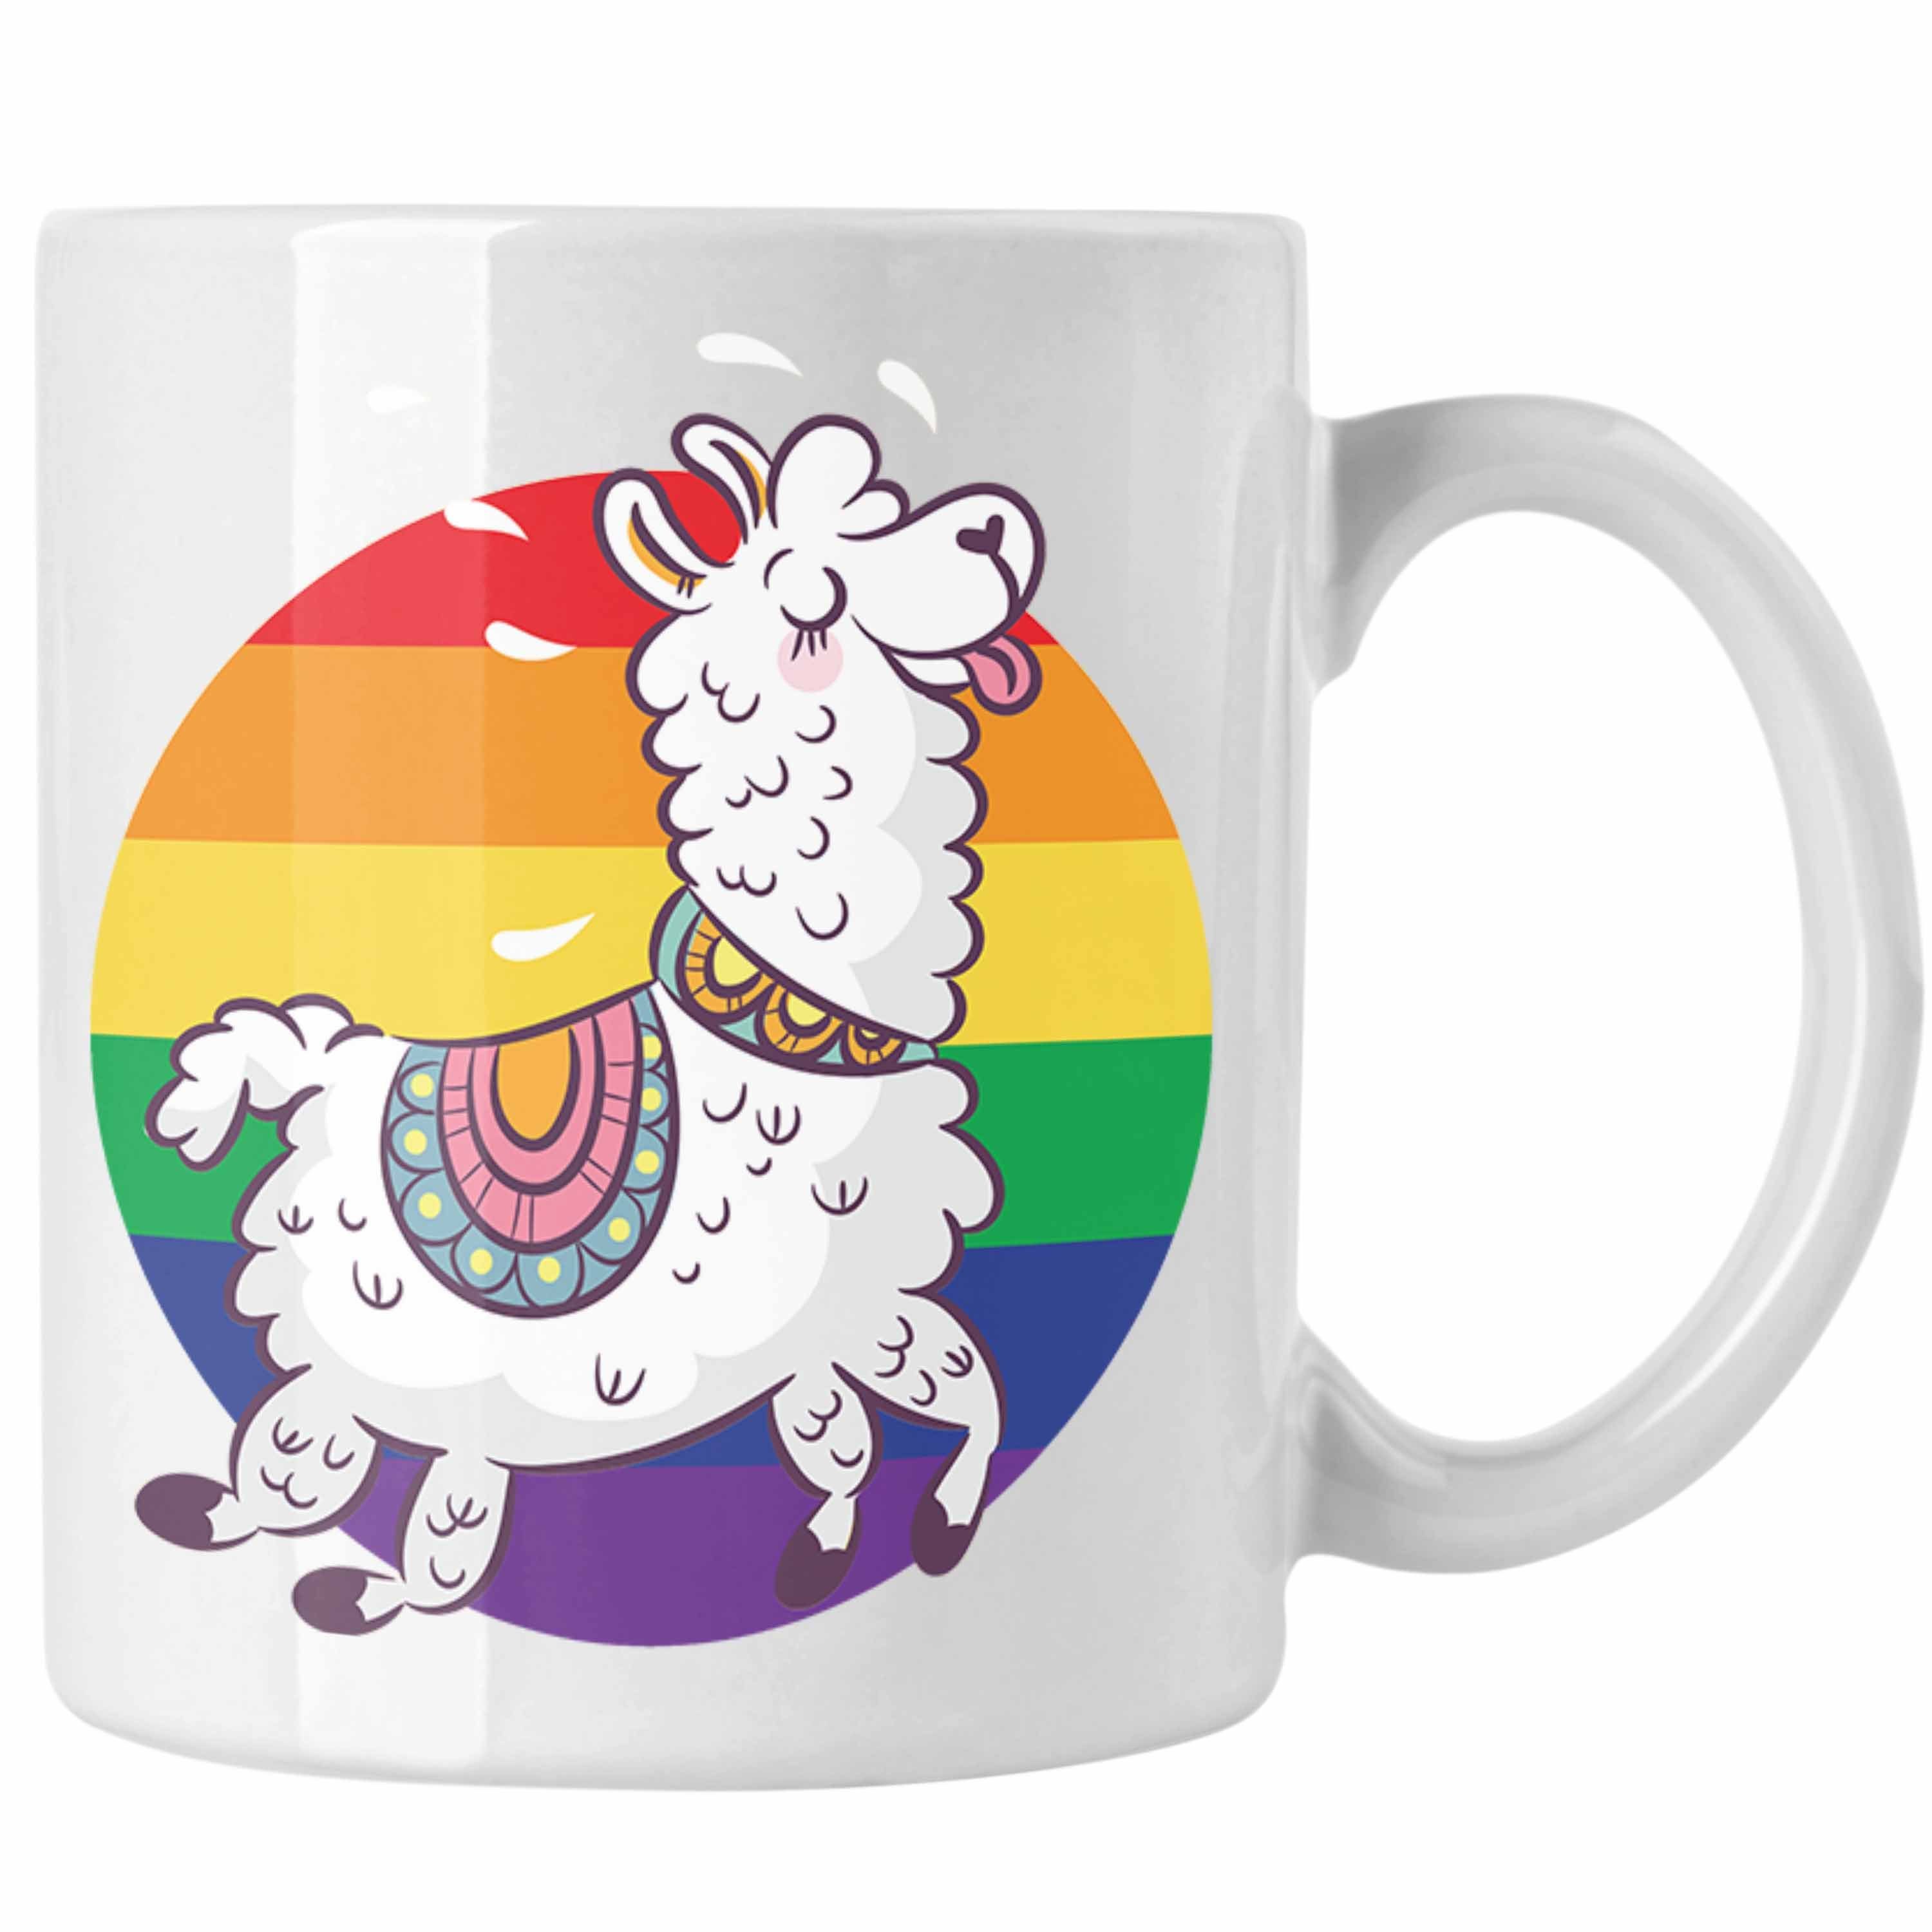 Trendation Tasse Trendation - Tolles Geschenk Tasse Grafik Pride Transgender Regenbogen Weiss Llama Schwule Lesben LGBT